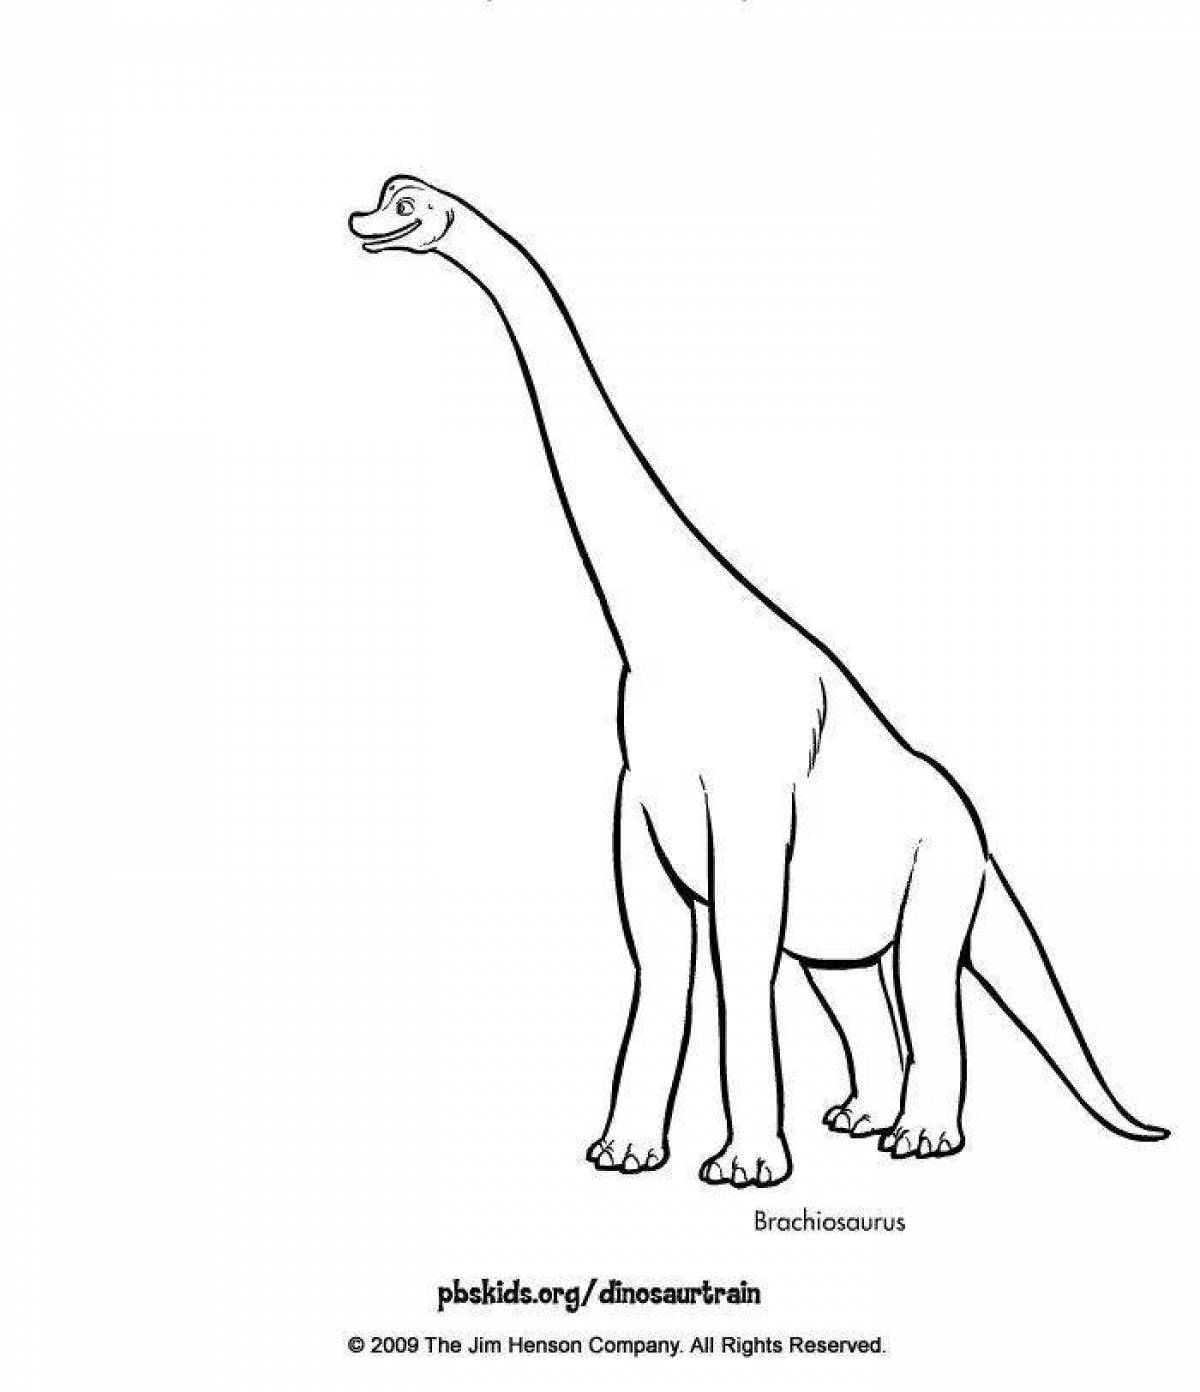 Brontosaurus deluxe coloring book